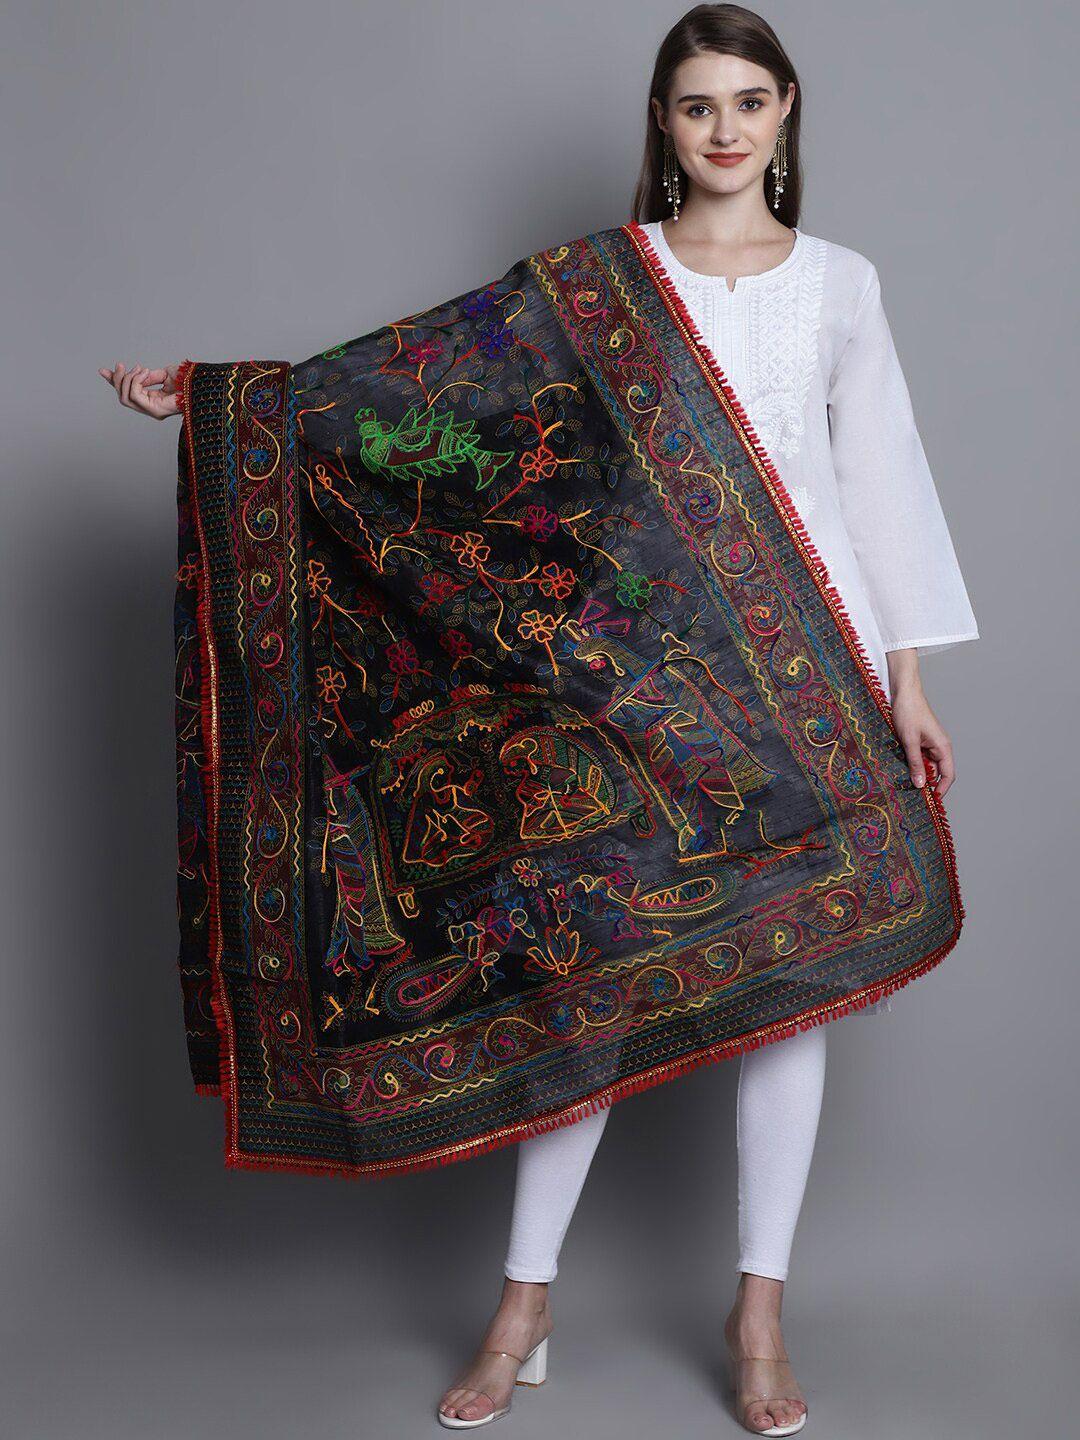 soundarya floral embroidered silk dupatta with thread work